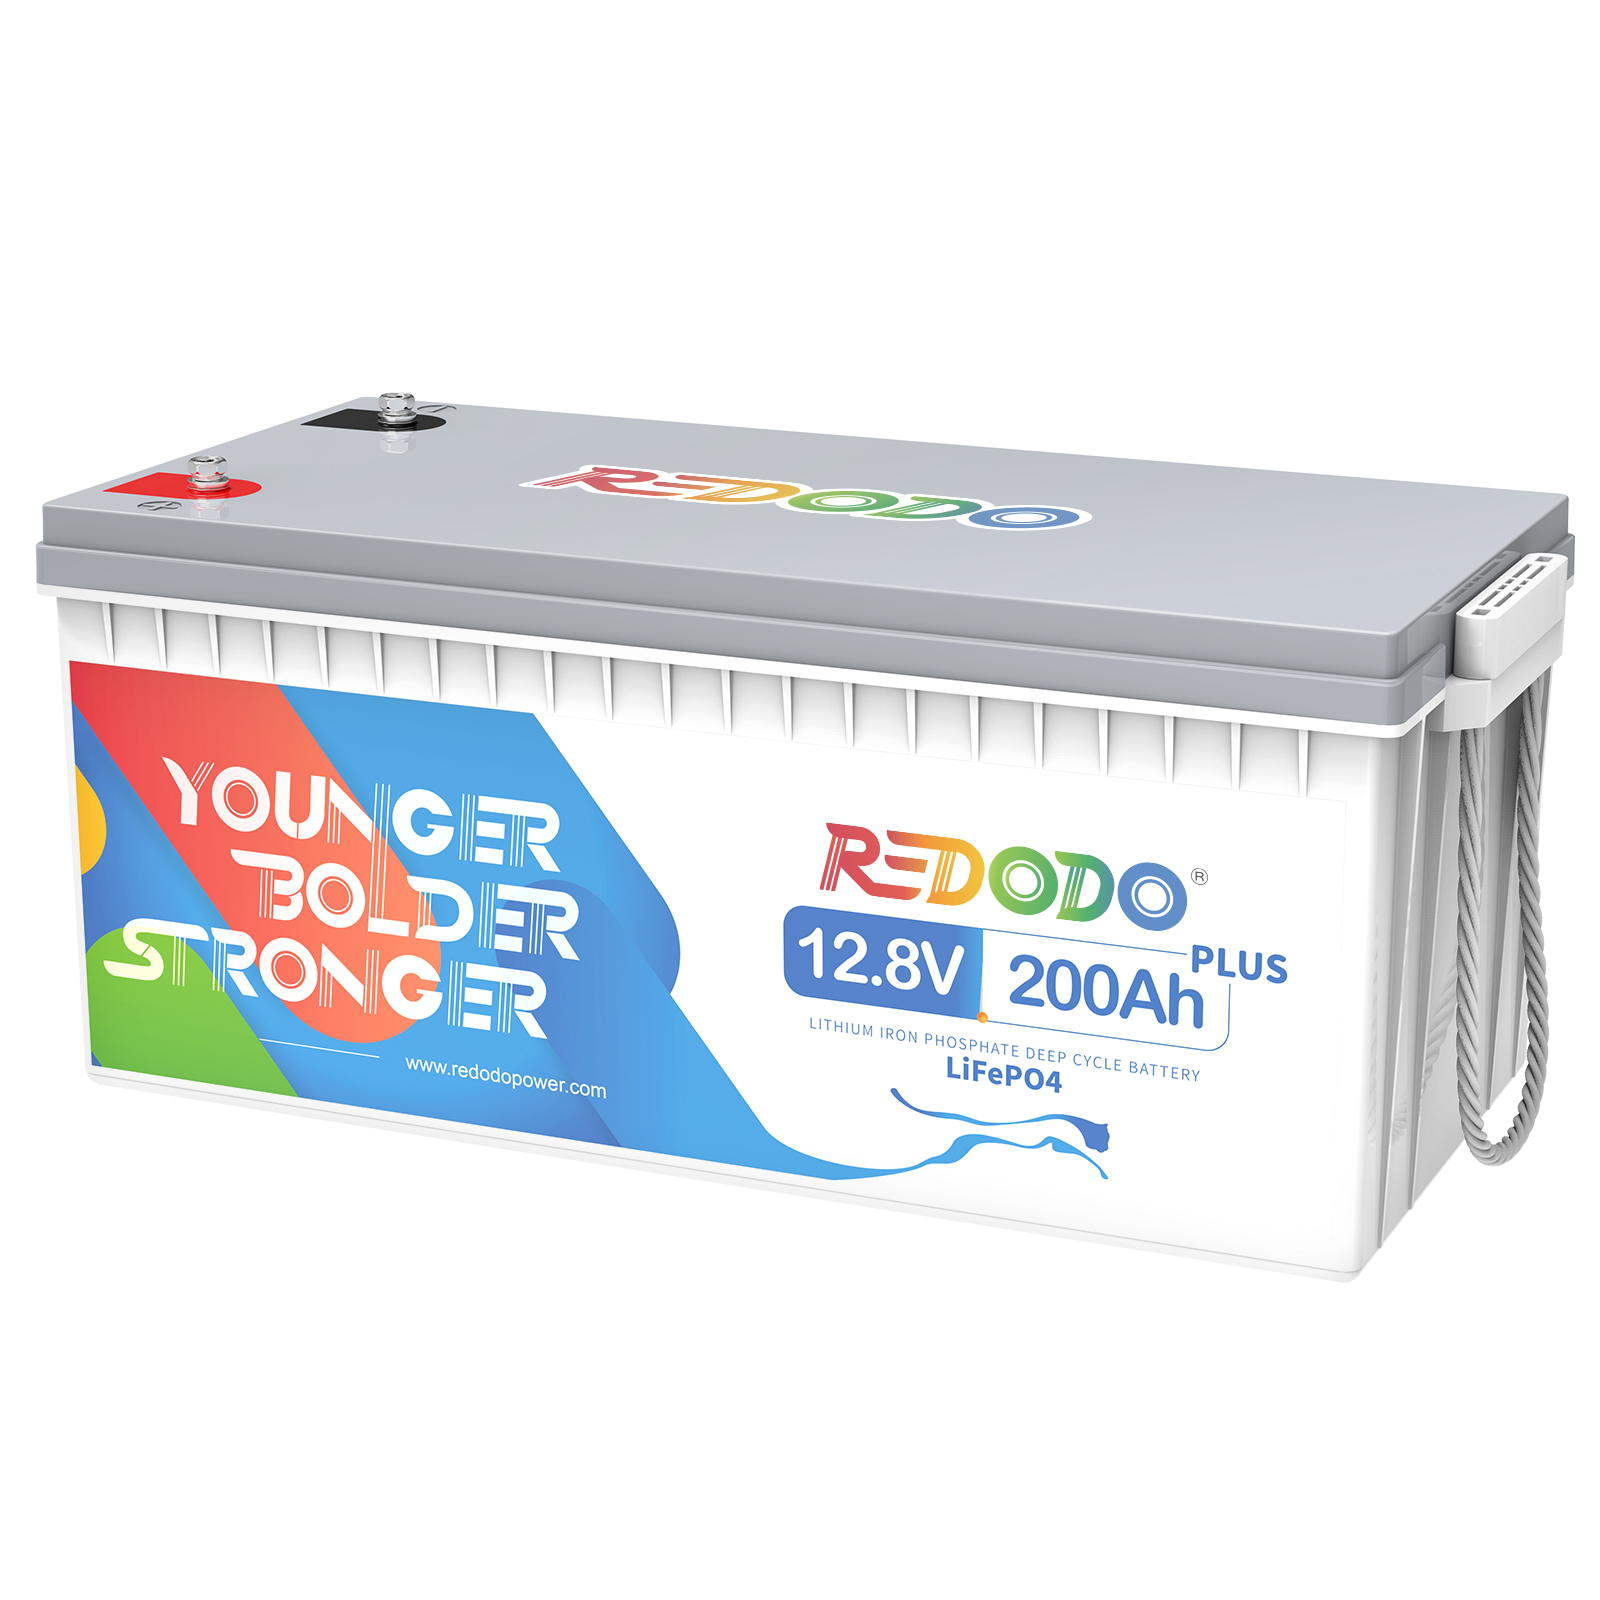 【Like New】Redodo 12V 200Ah Plus LiFePO4 Battery | 2.56kWh & 2.56kW